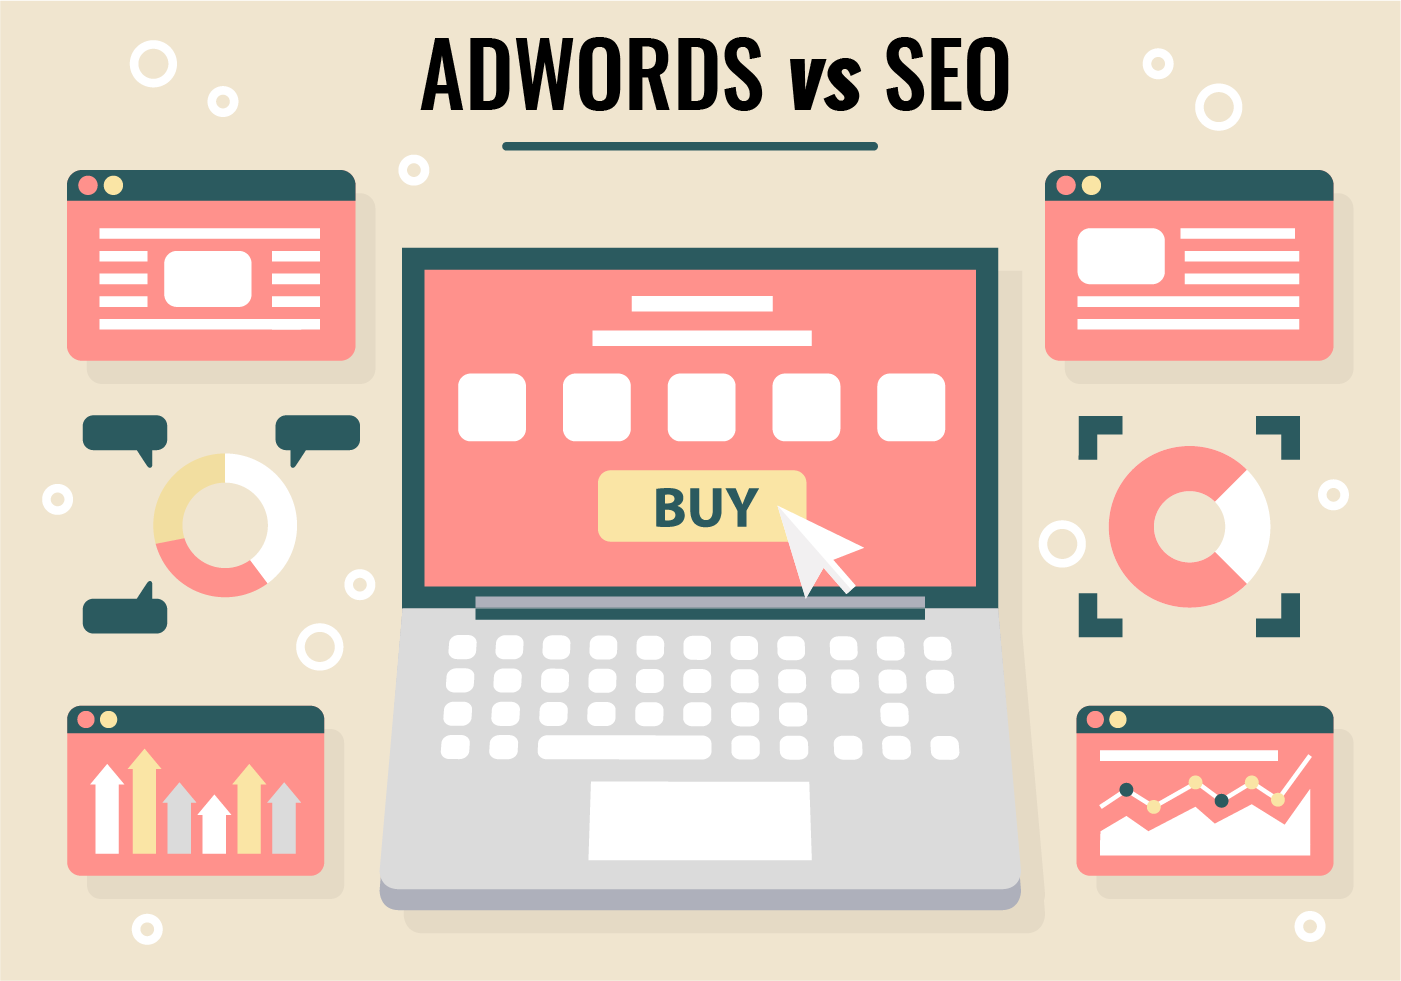 Adwords vs SEO Image